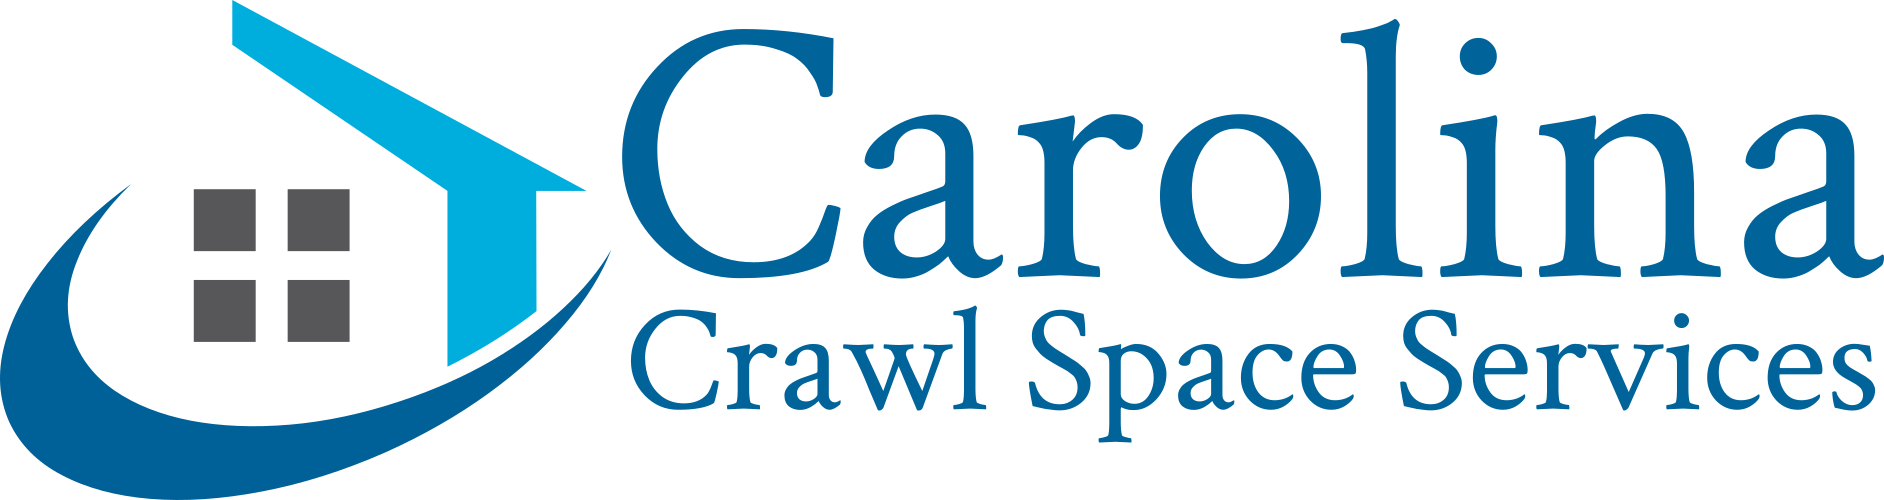 Carolina Crawl Space Services, LLC Logo